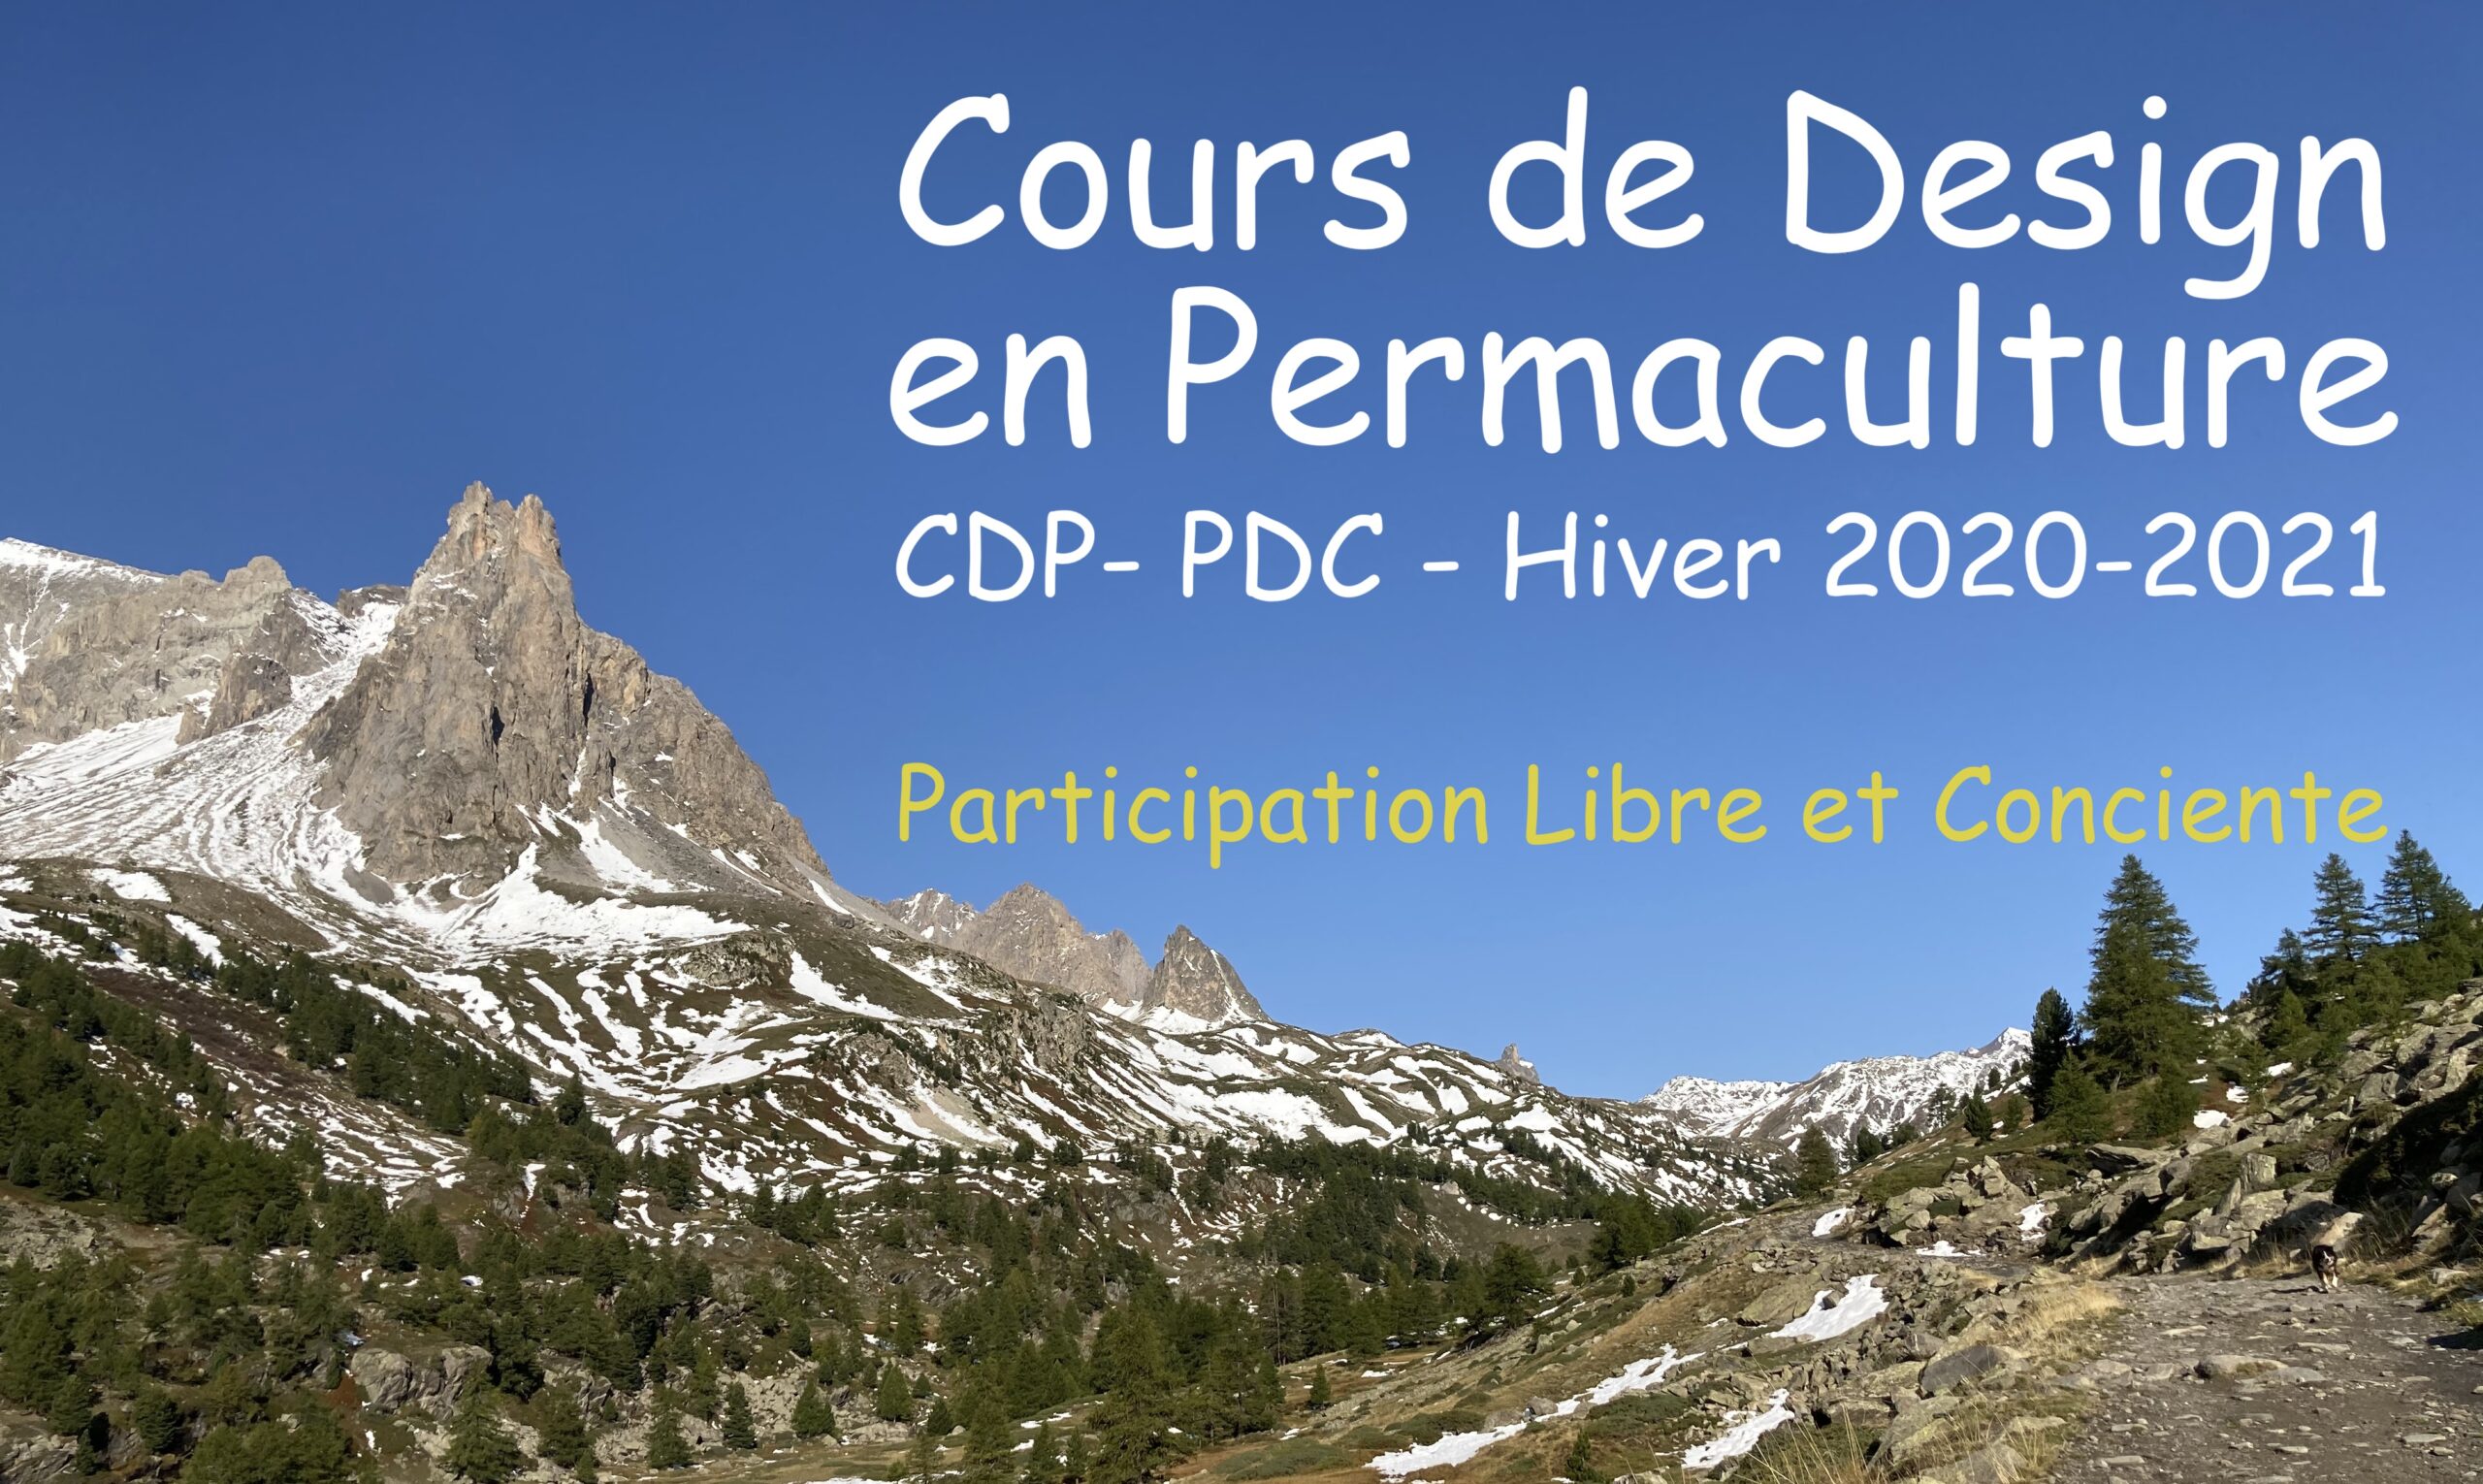 CDP – Cours de Design en Permaculture en 6 Week-End – Hiver 2020 – 2021